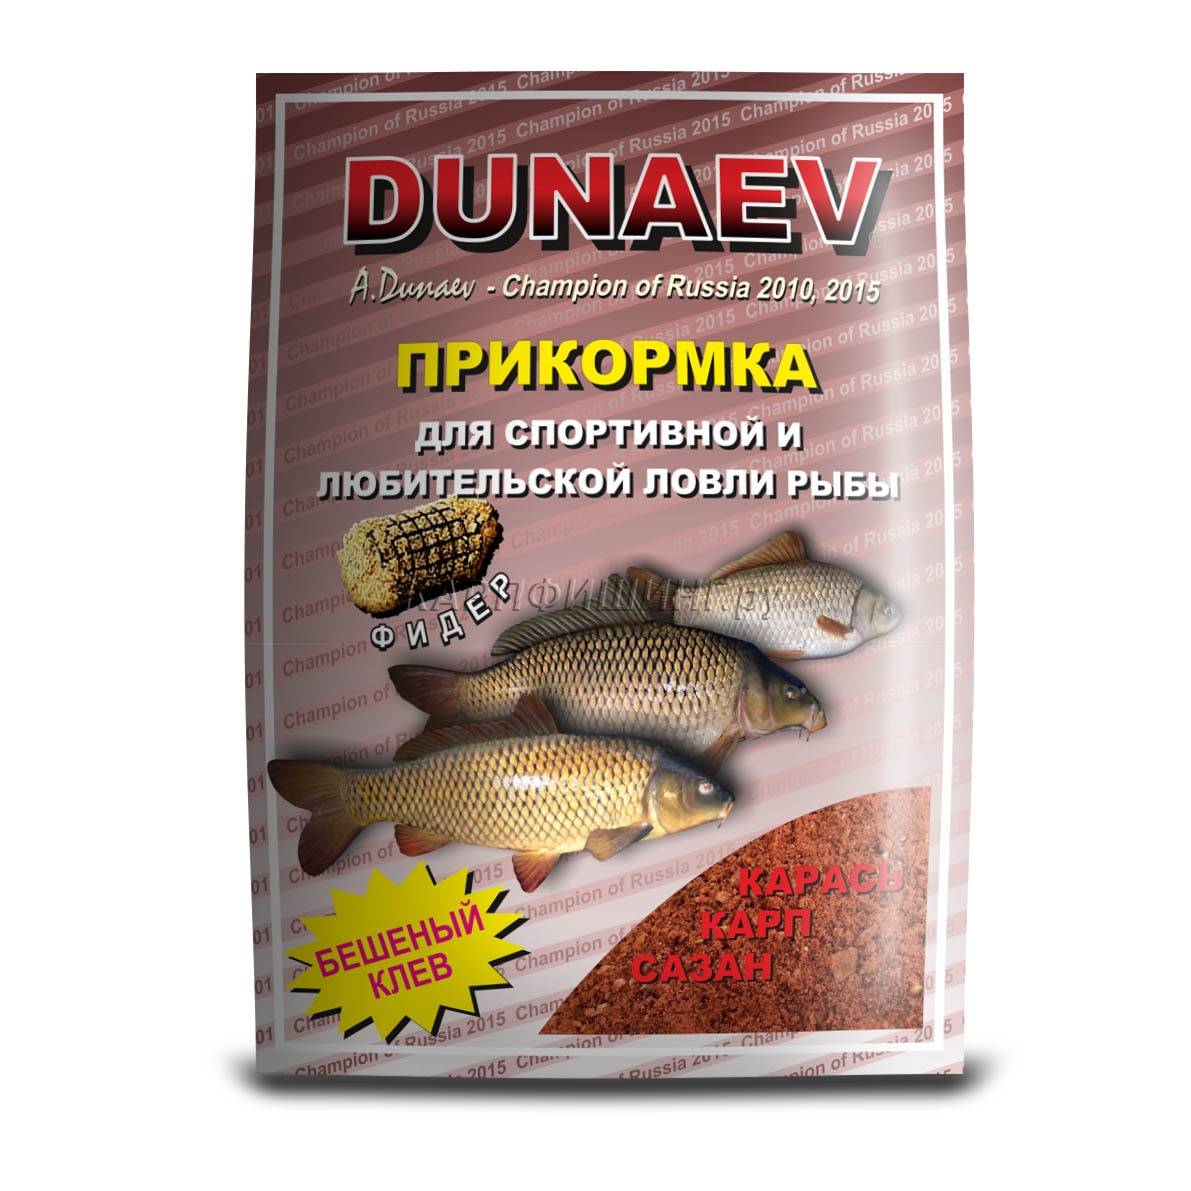 Прикормка рыболовная Dunaev Классика карась/карп/сазан 900гр купить вКалининграде